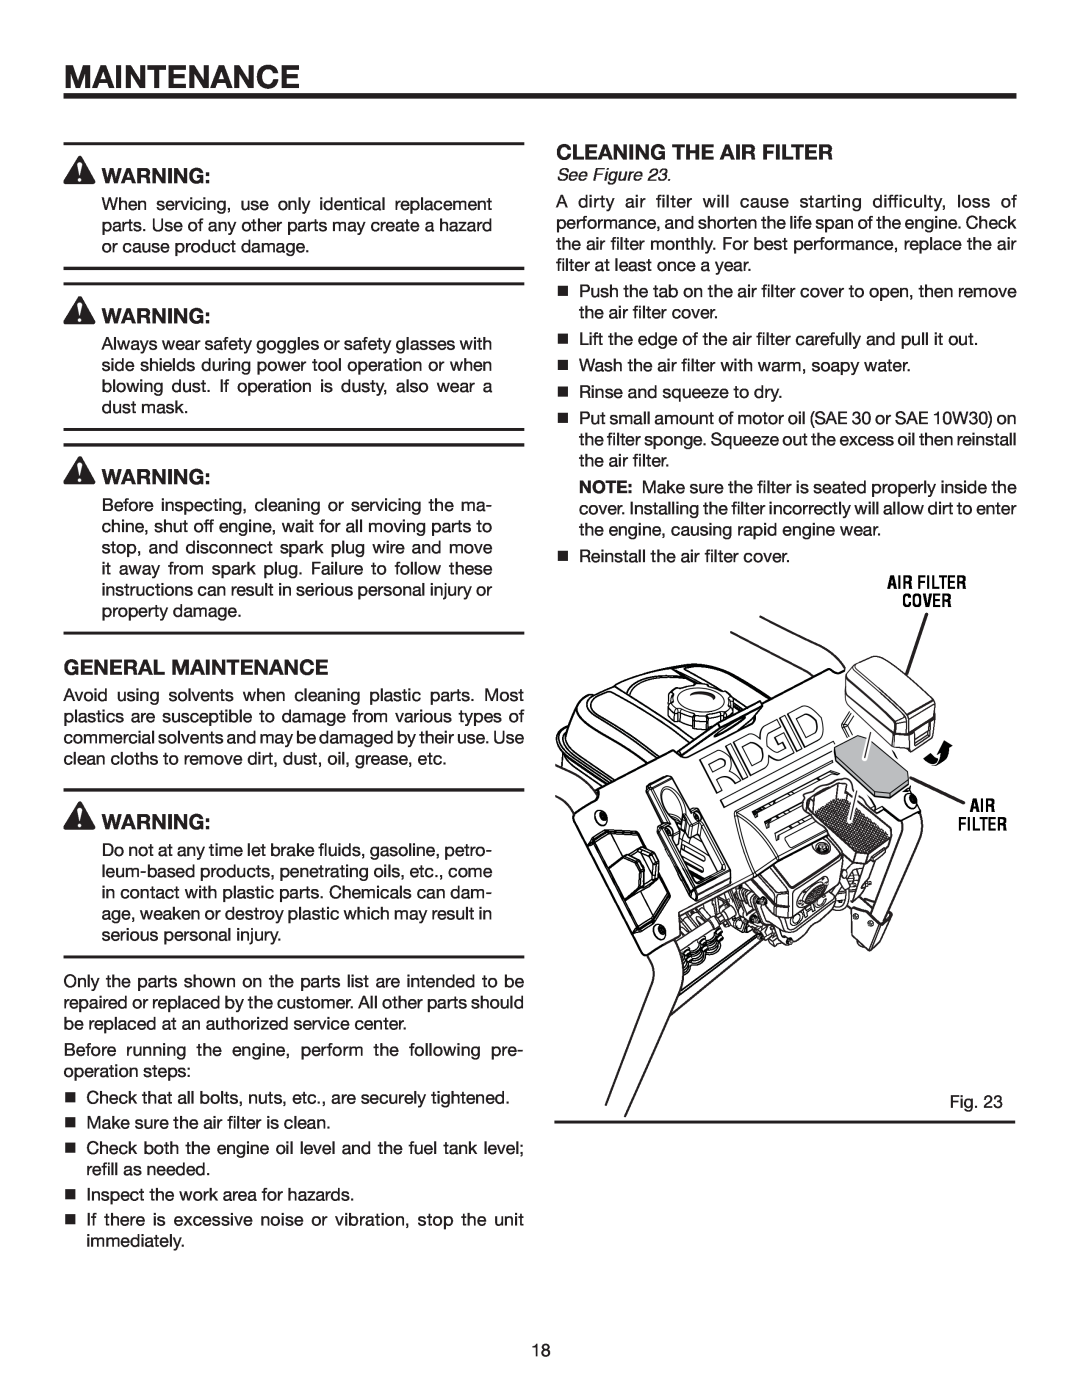 RIDGID RD80763 manual General Maintenance, cleaning the air filter, Air Filter Cover Air Filter, See Figure 